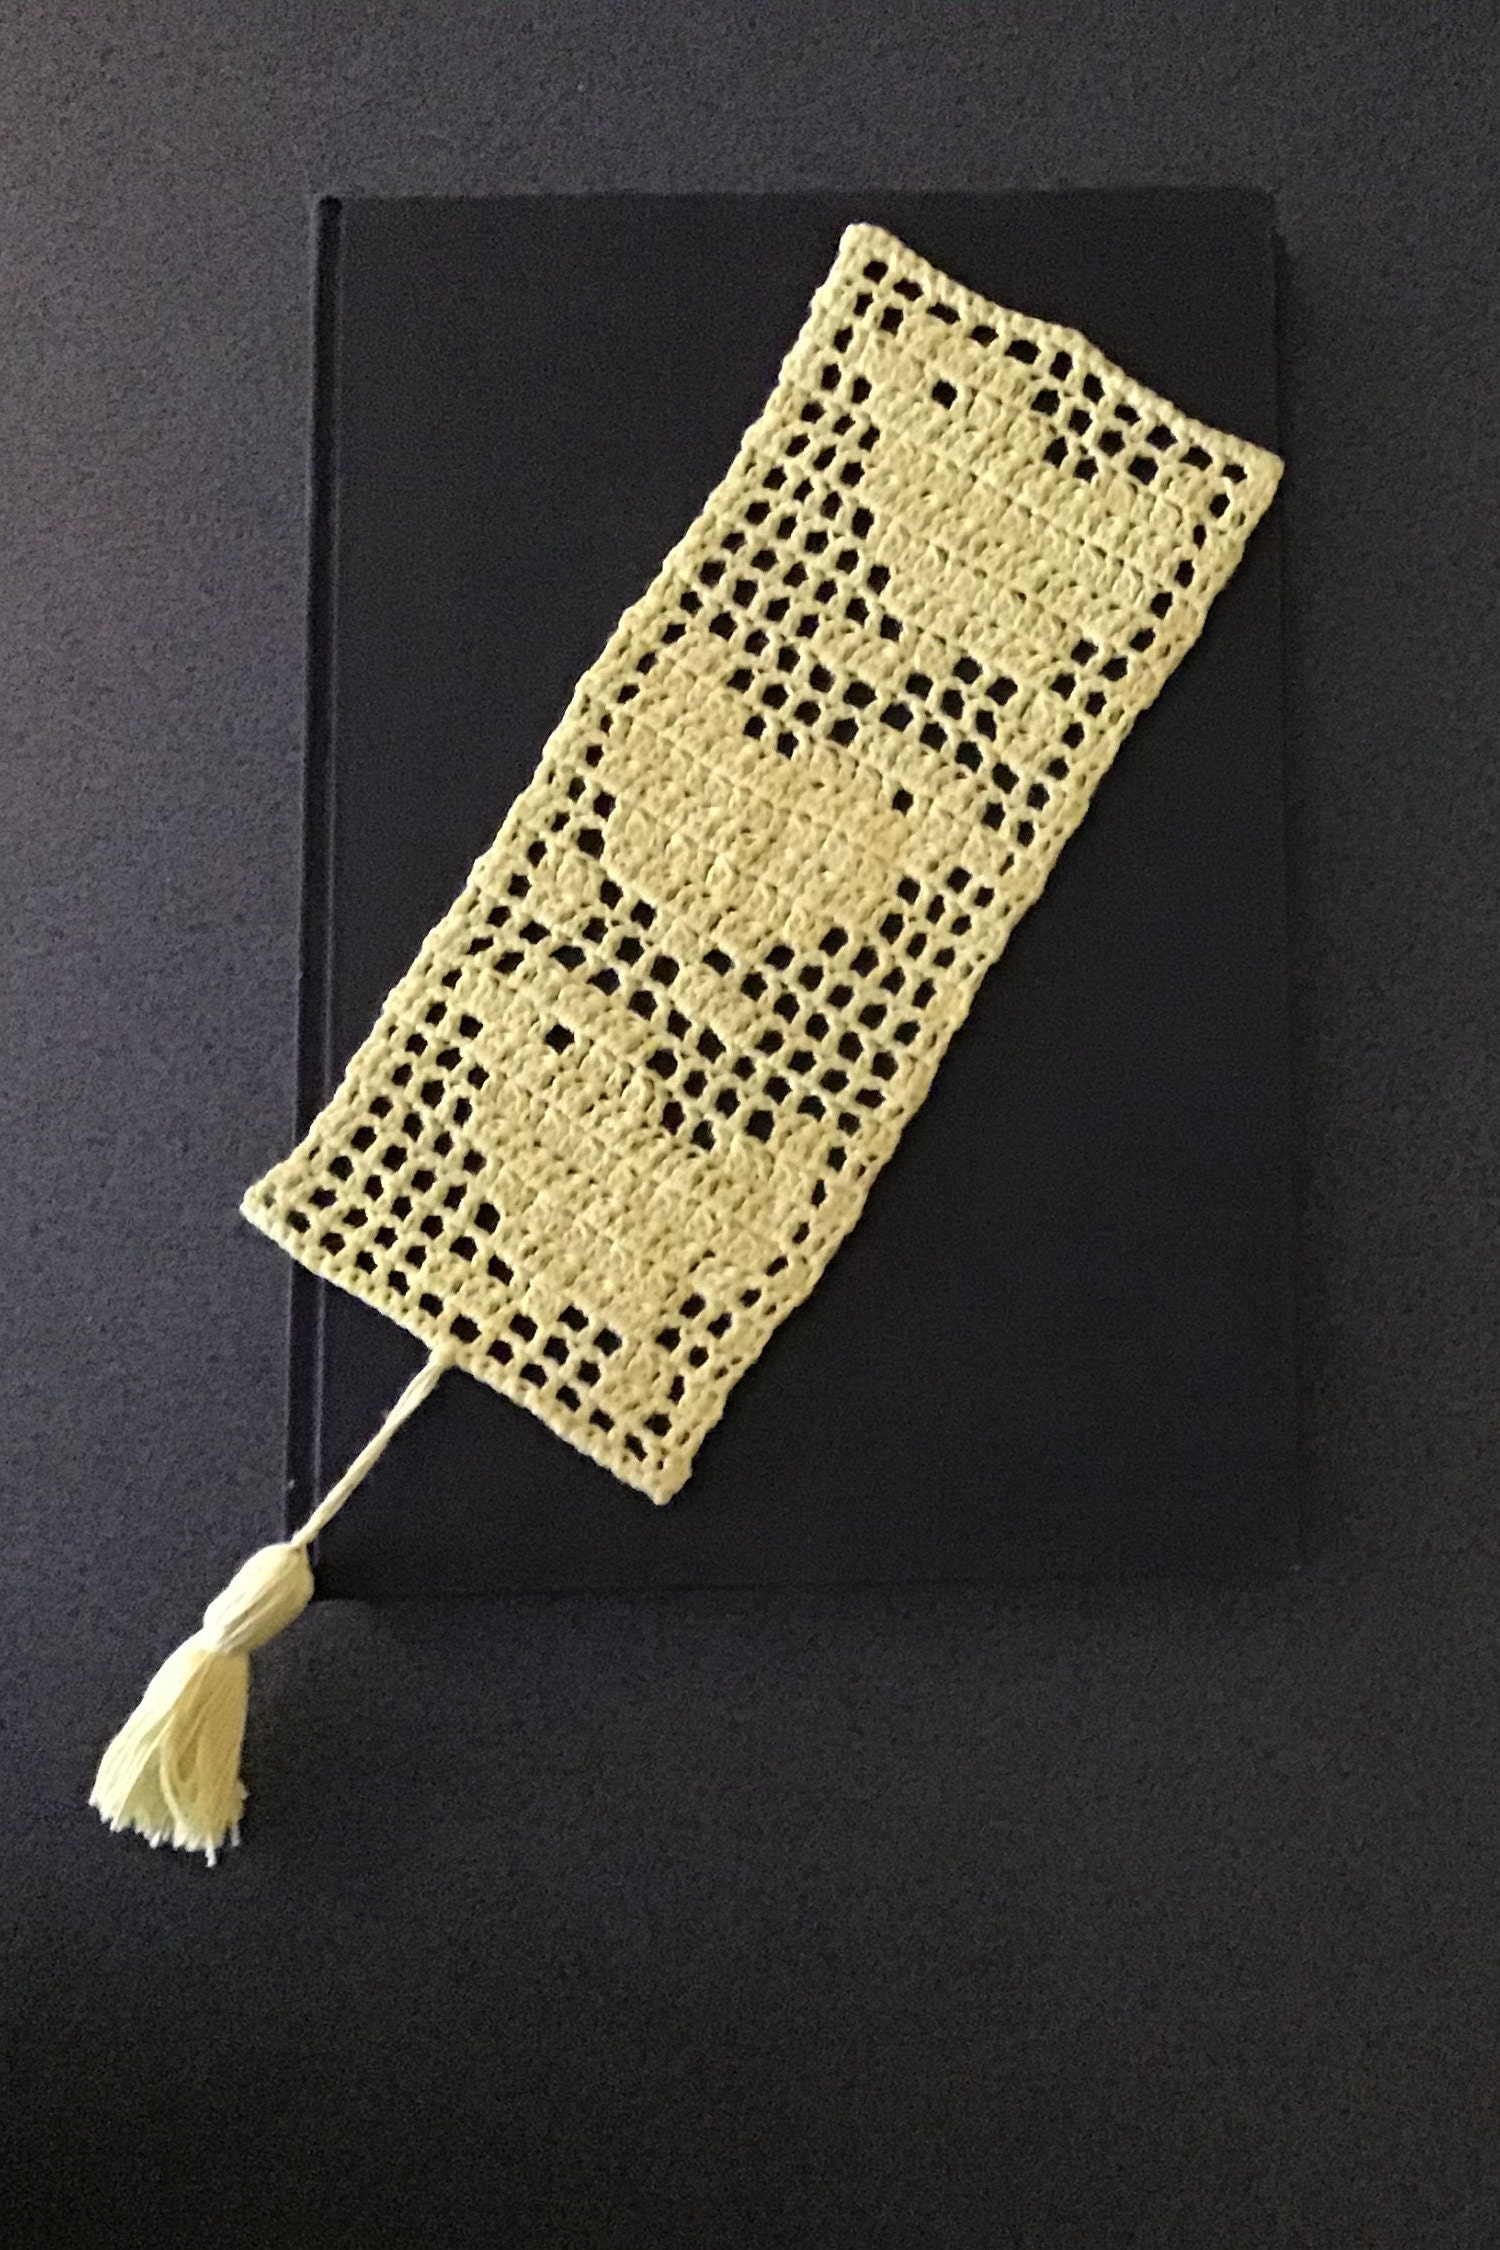 Omgeving twee weken Melodieus In Filet Crochet Yellow Bookmark With Little Chicks. - Etsy